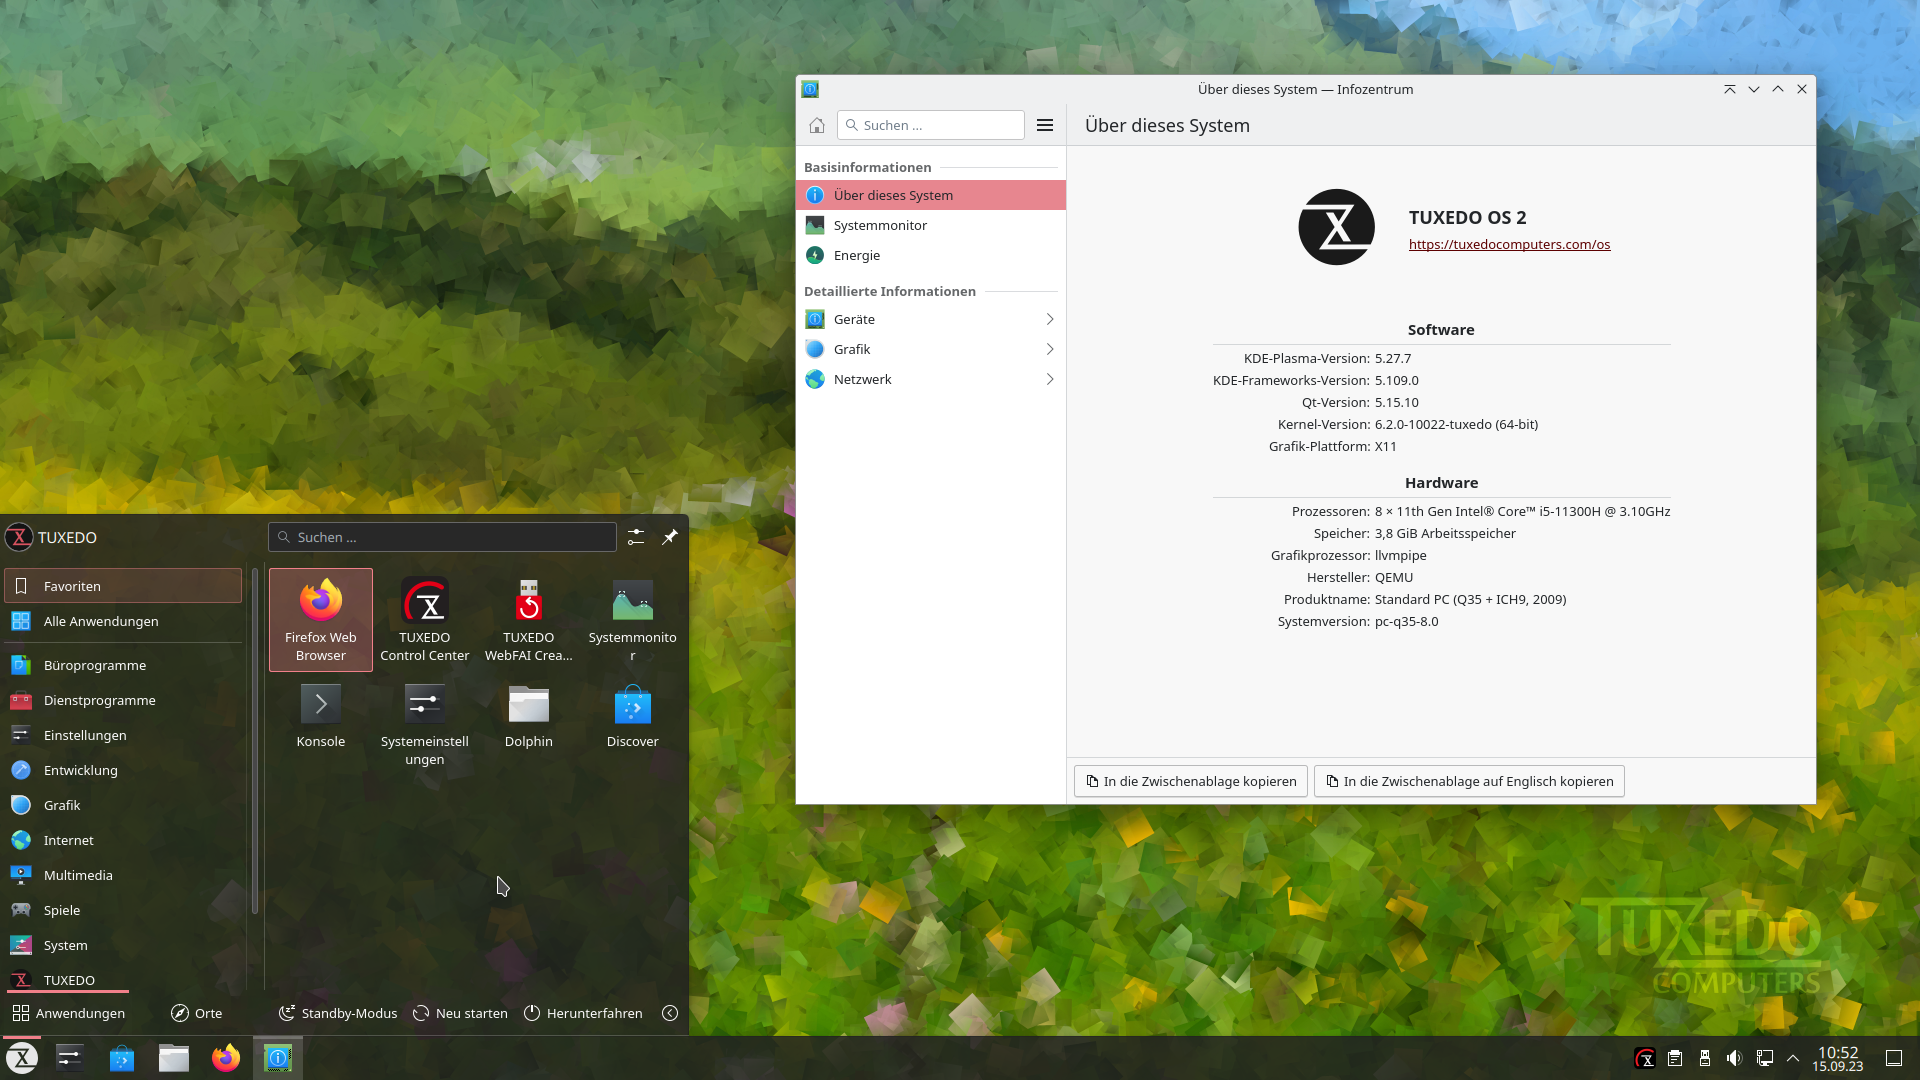 TUXEDO OS 2 with KDE Plasma 5.27 and Tuxedo kernel 6.2.